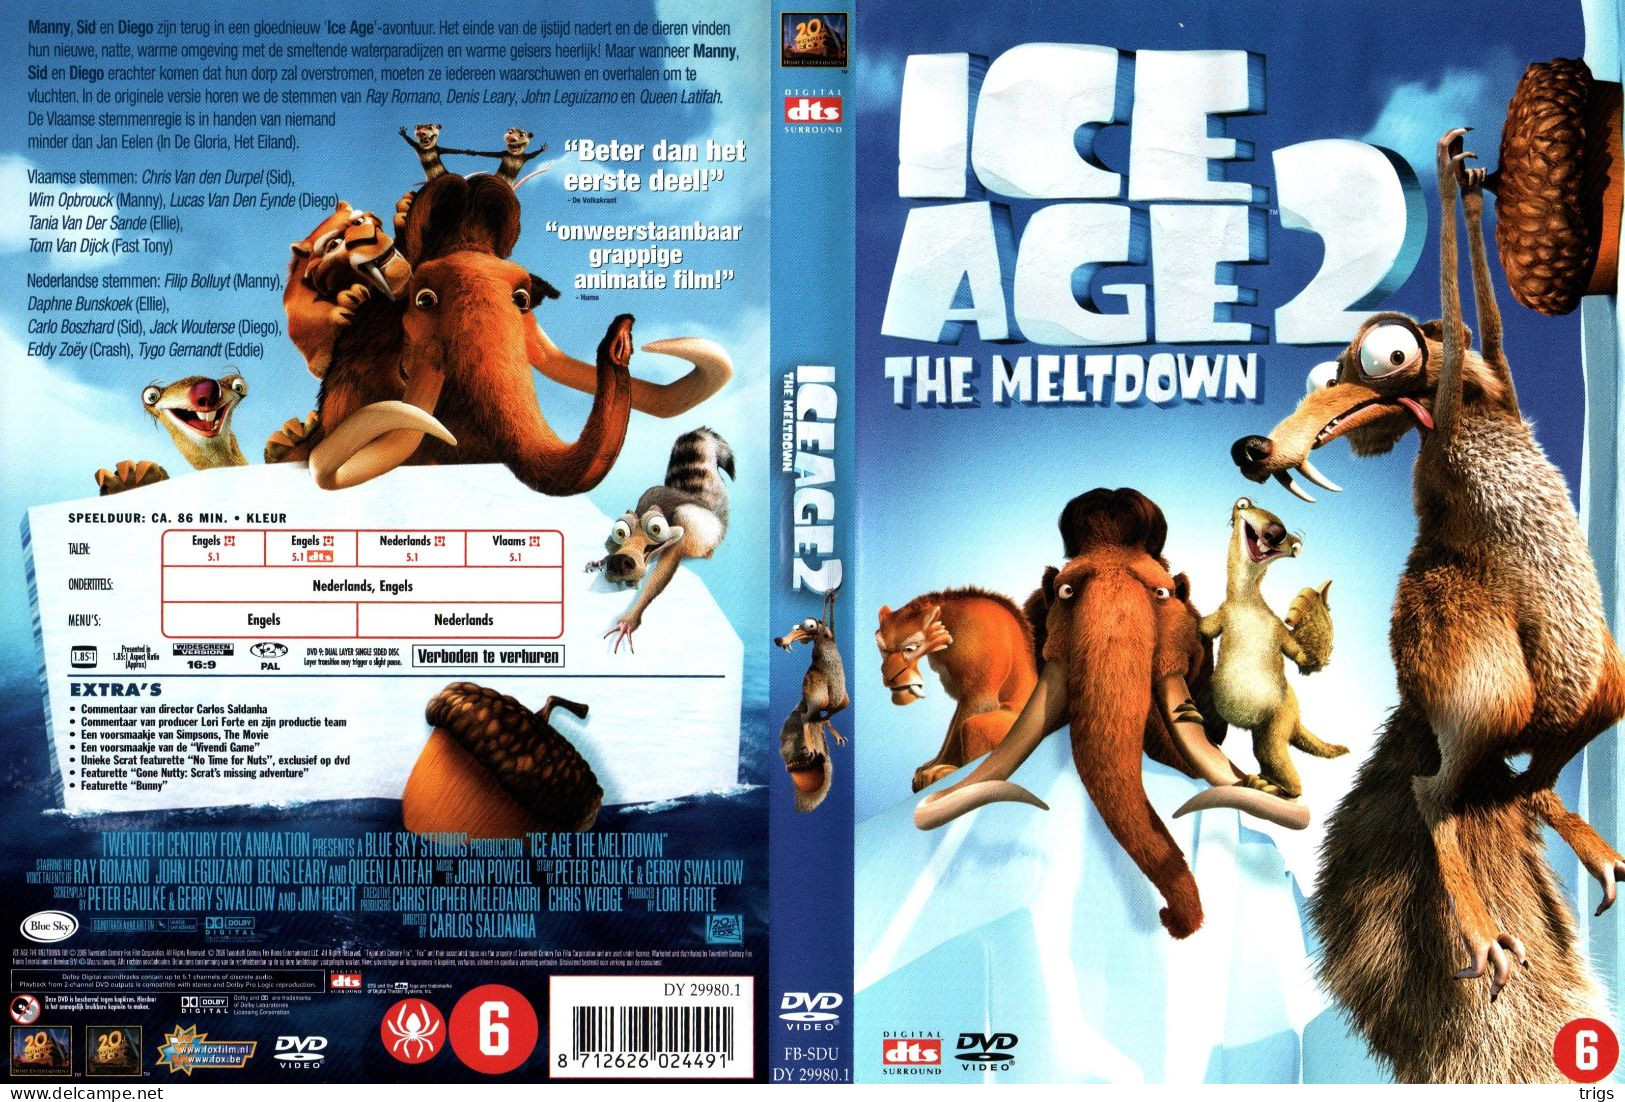 DVD - Ice Age 2: The Meltdown - Animation